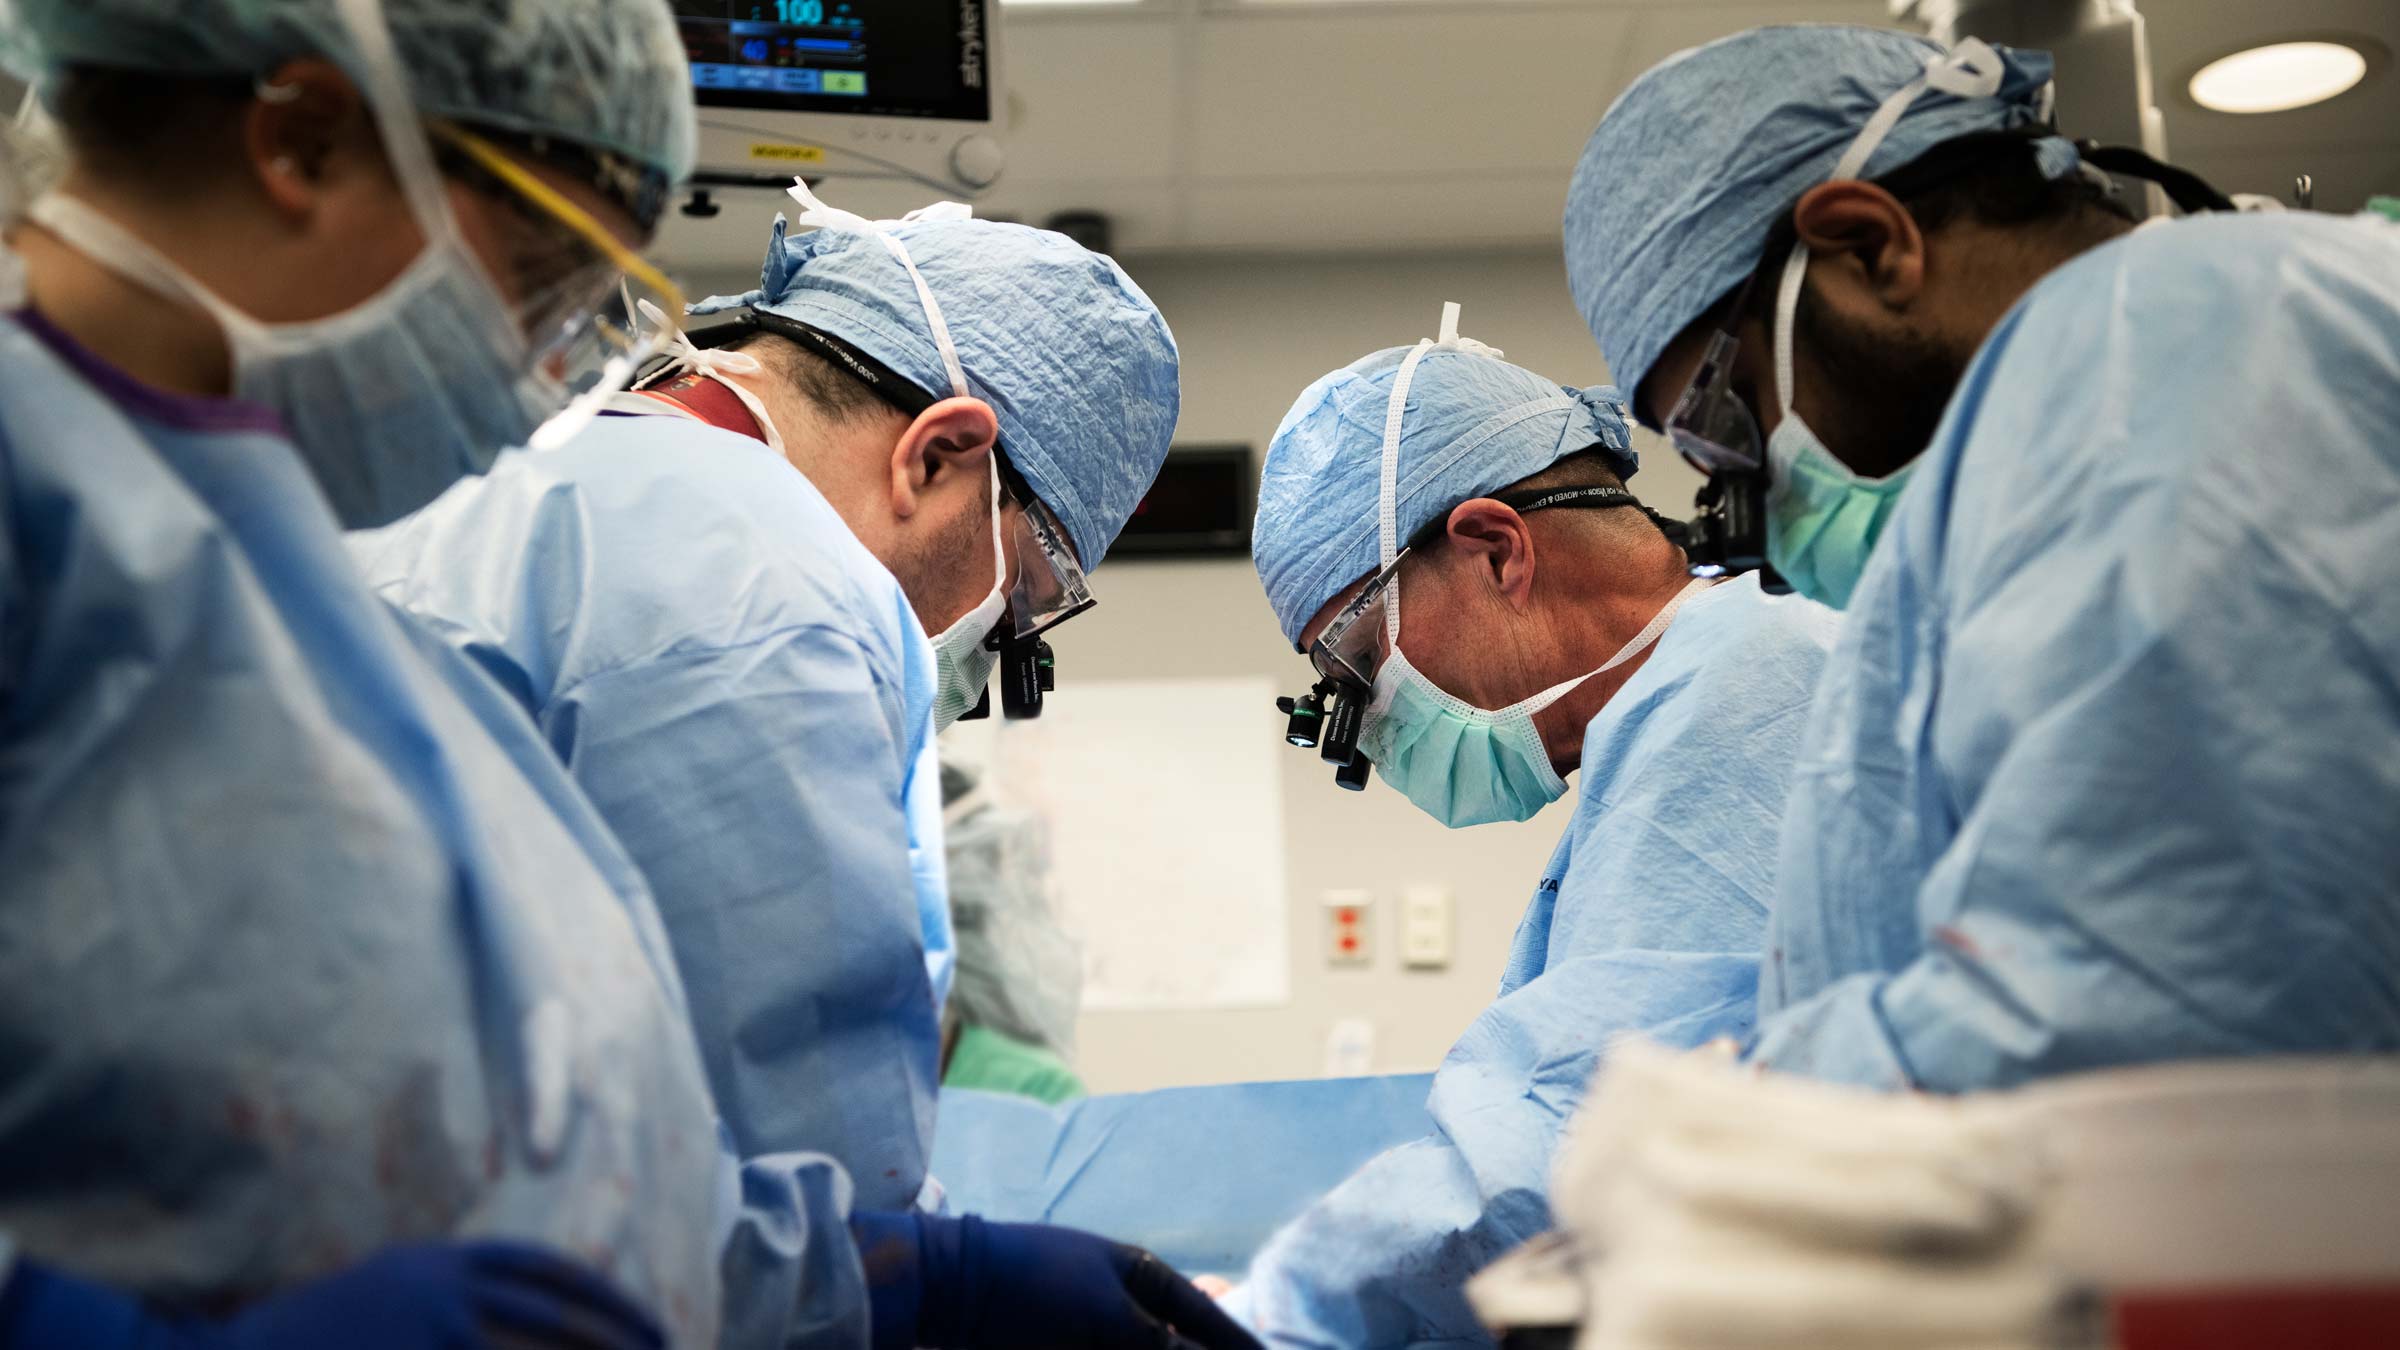 Dr. Washburn performing a surgery